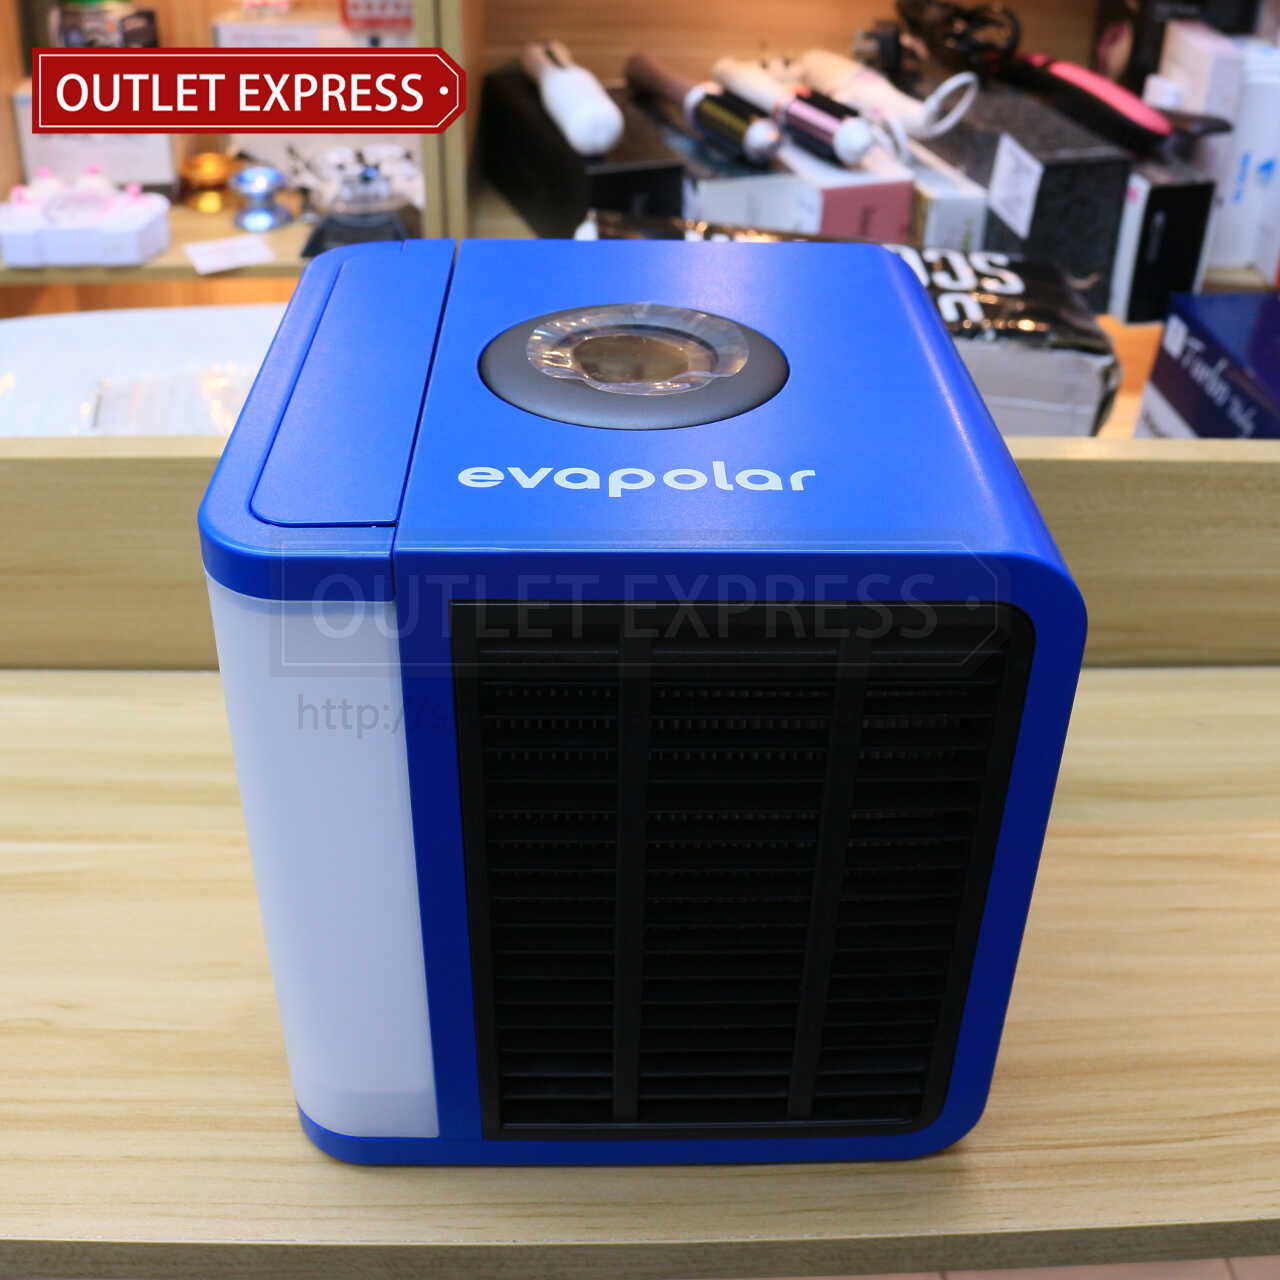 Evapolar 小型流動冷氣機(正面圖)- Outlet Express HK生活百貨城實拍相片